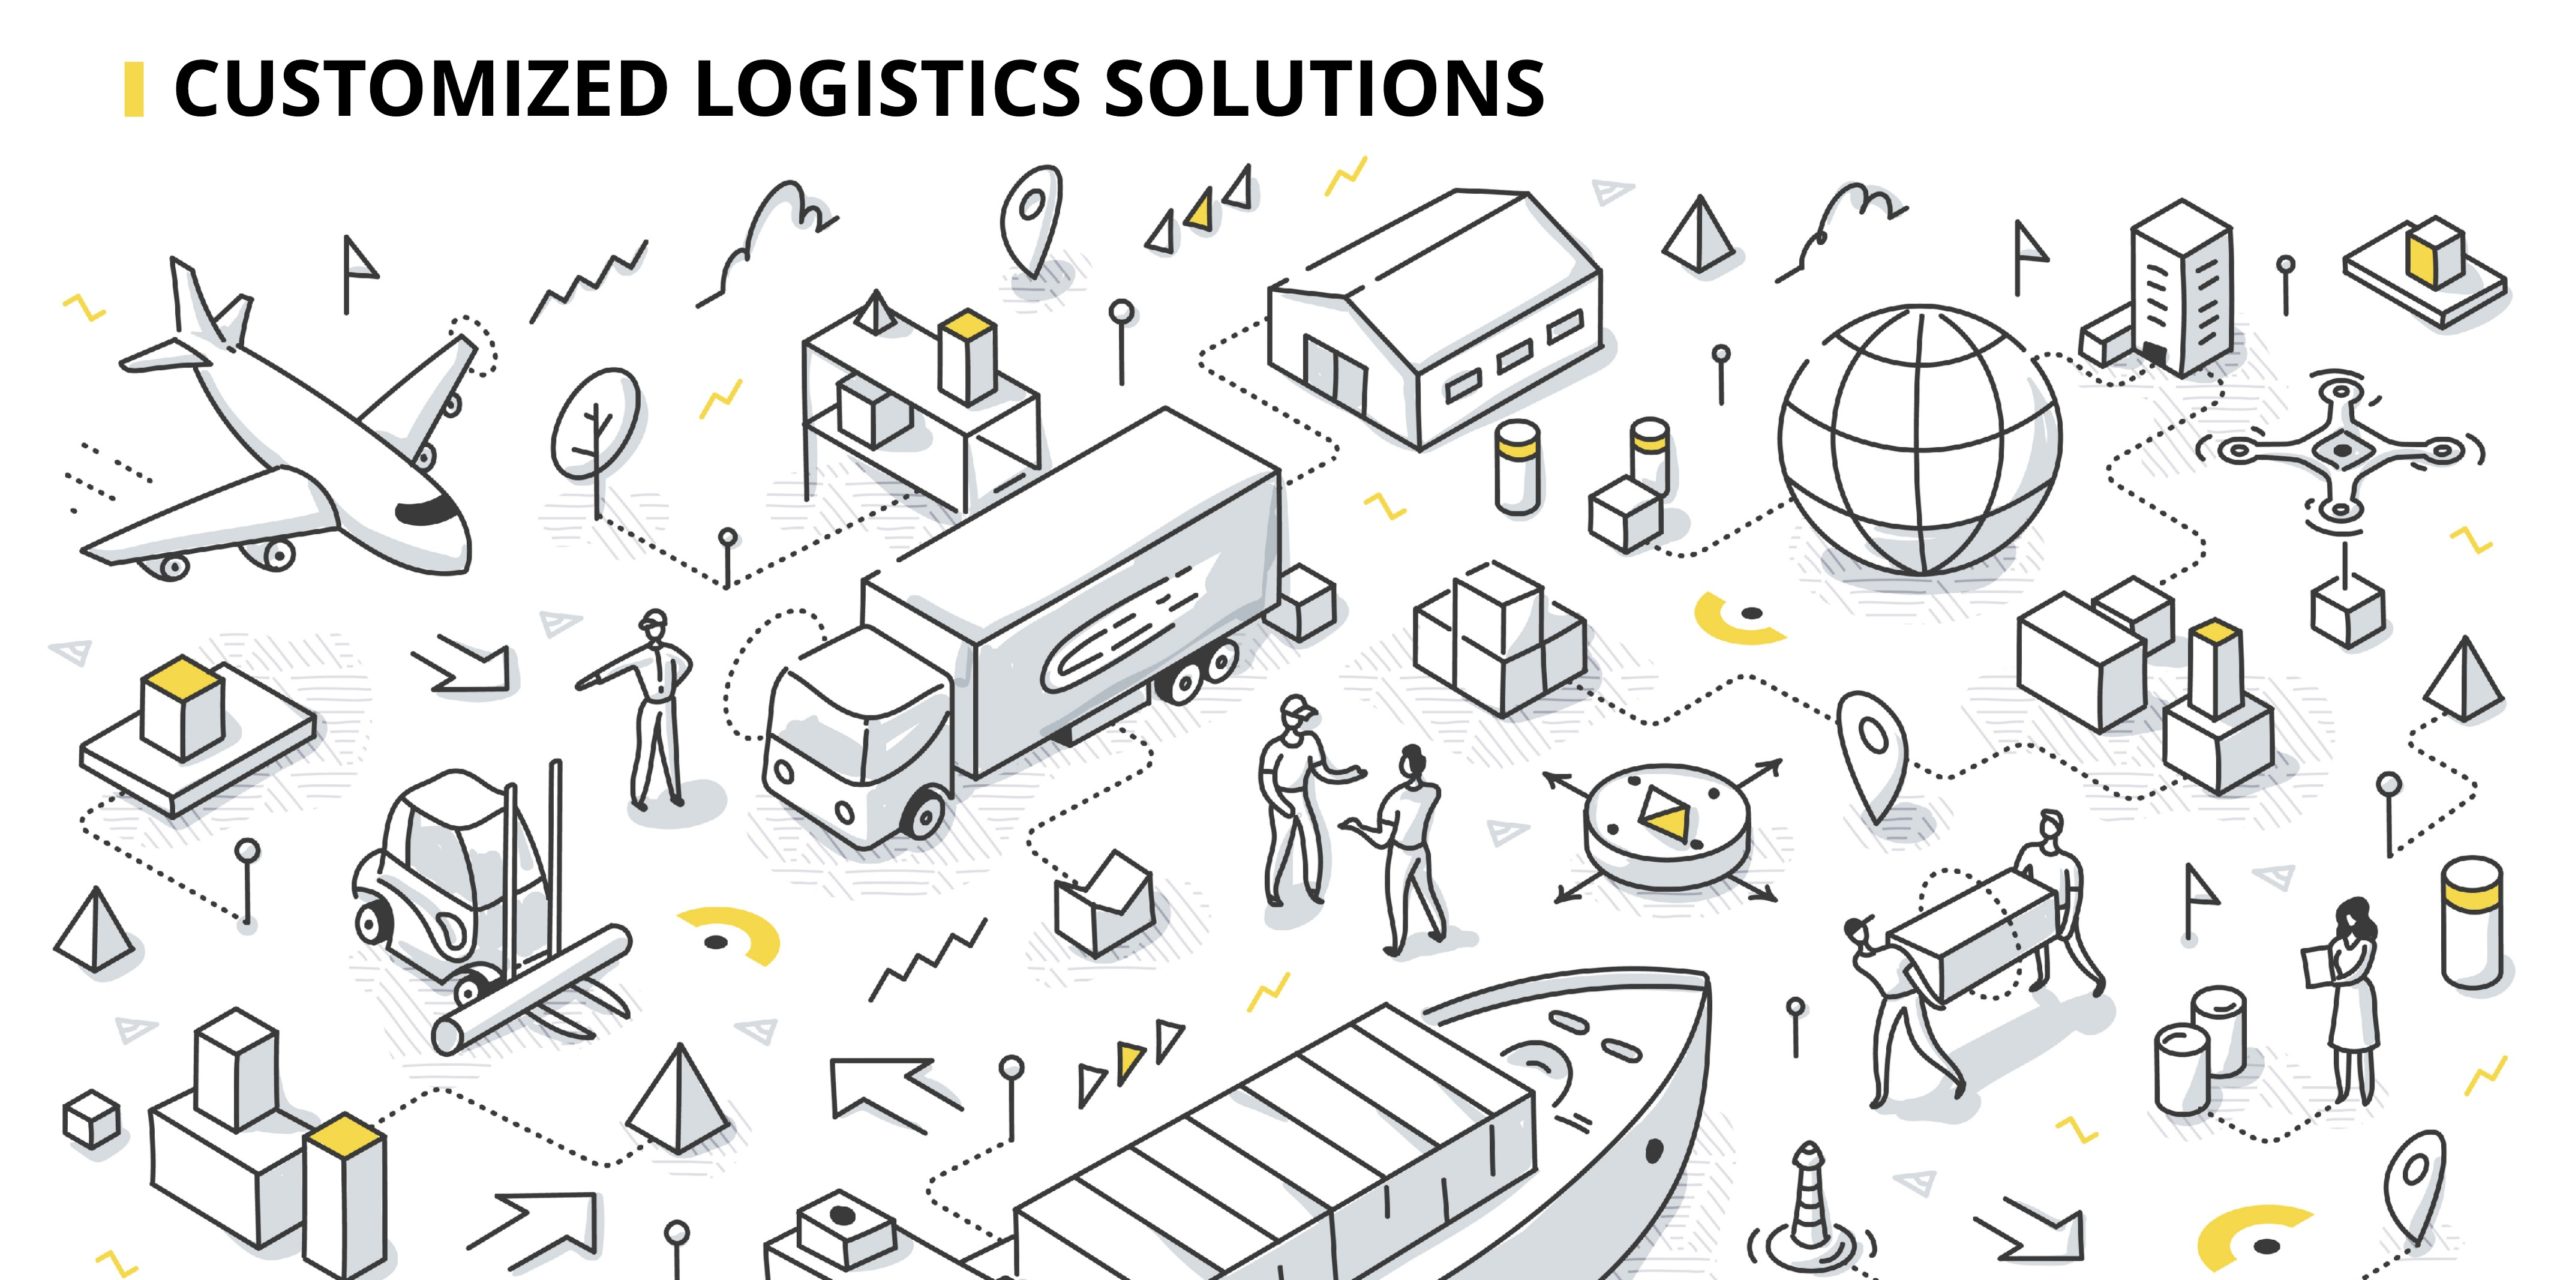 Customized-Logistics-Solutions-Graphic-1